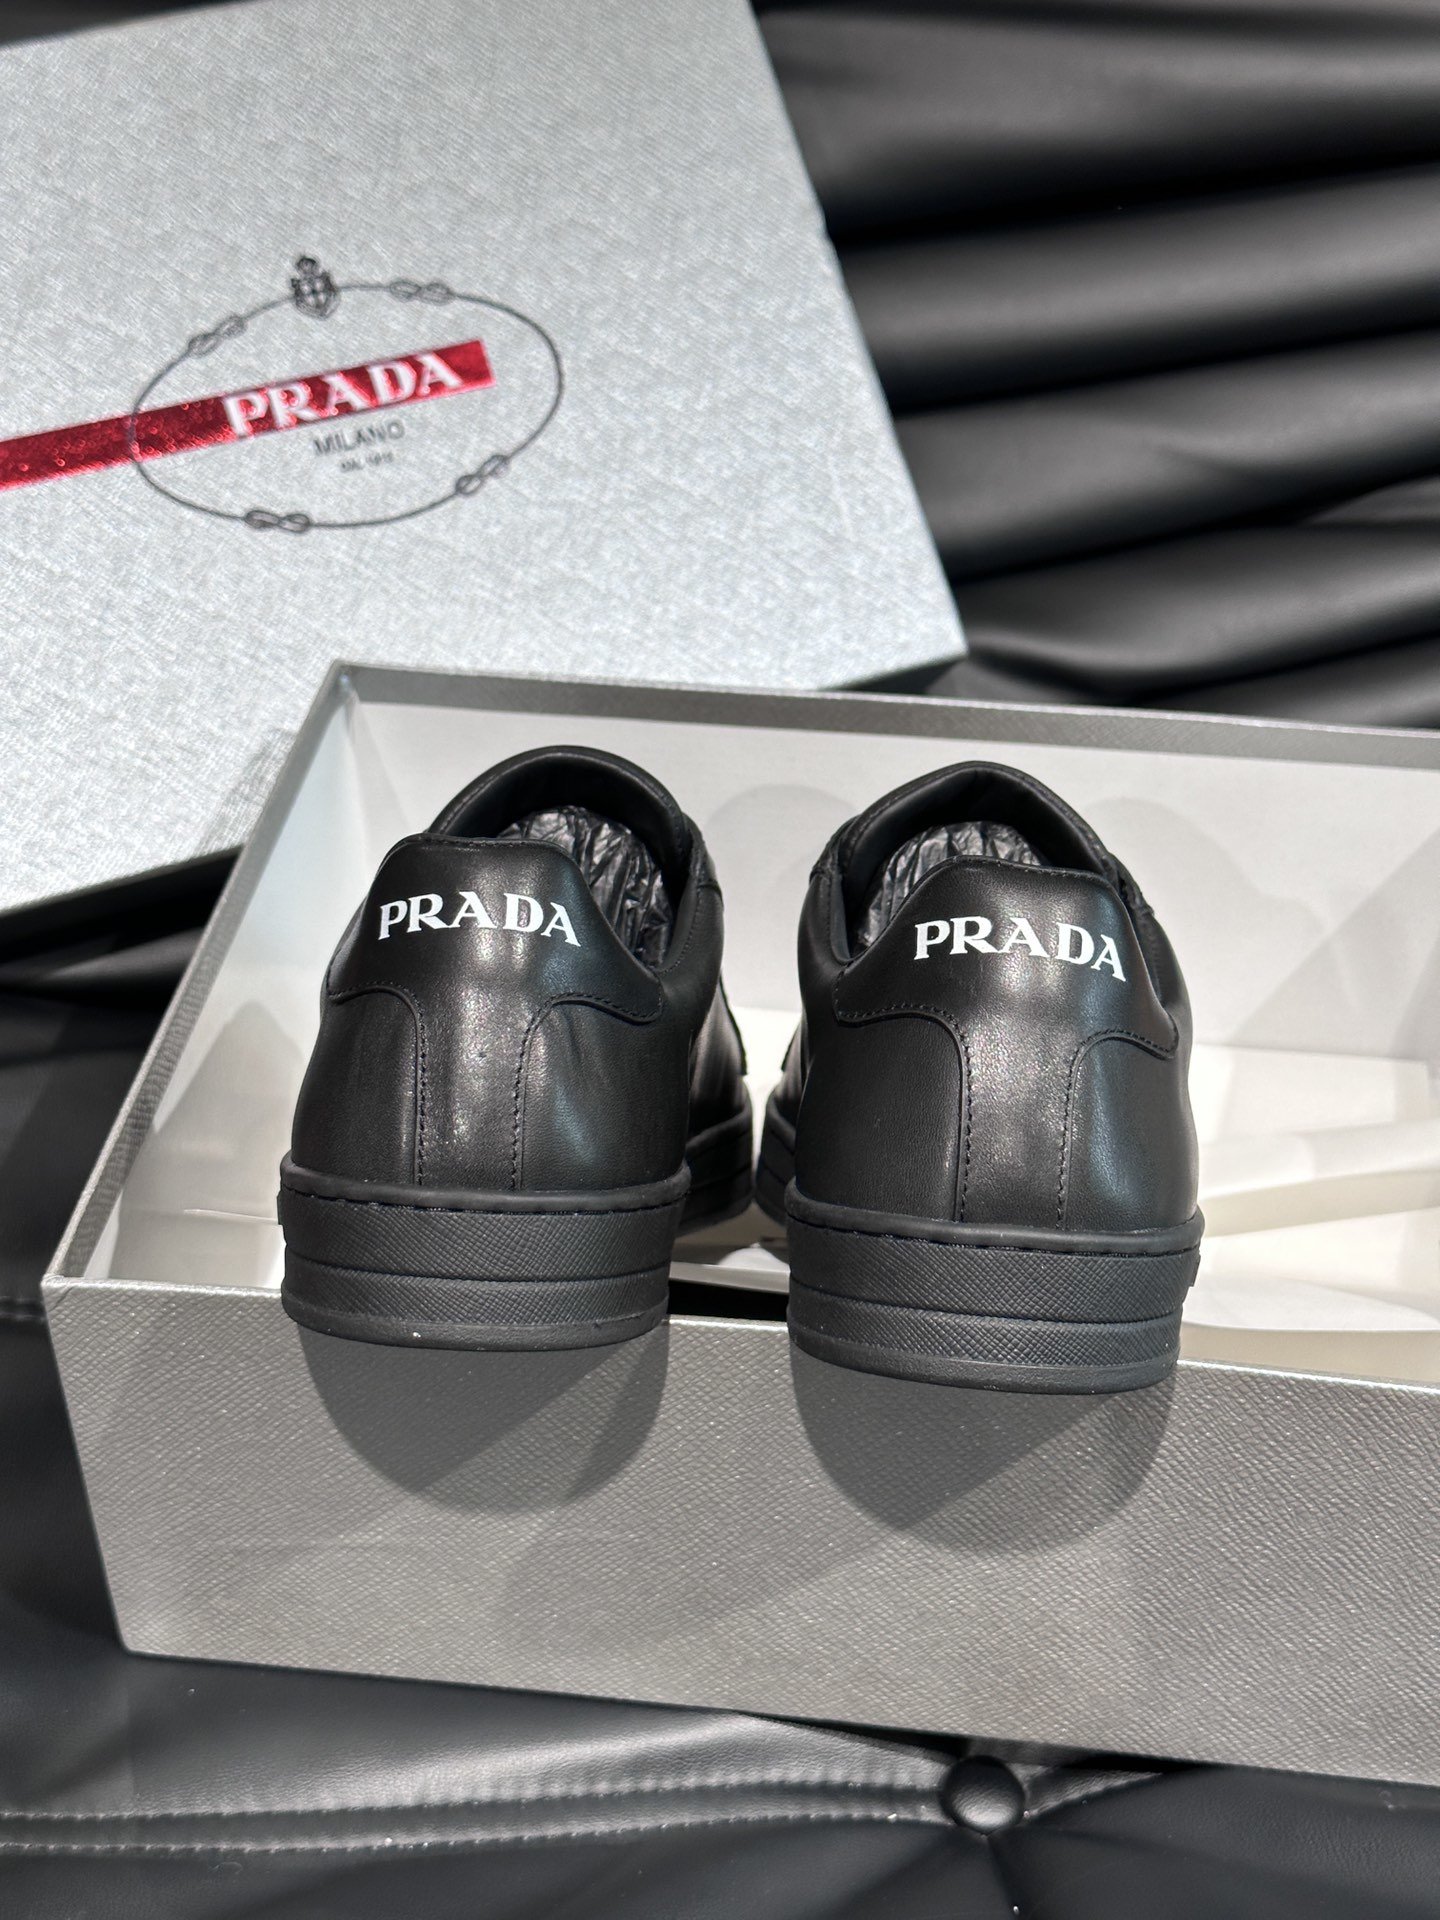 PRAD*新款皮革运动休闲鞋简约百搭小白鞋自90年代起惯用于传统精美鞋履的亮面皮革经Prada系列重释打